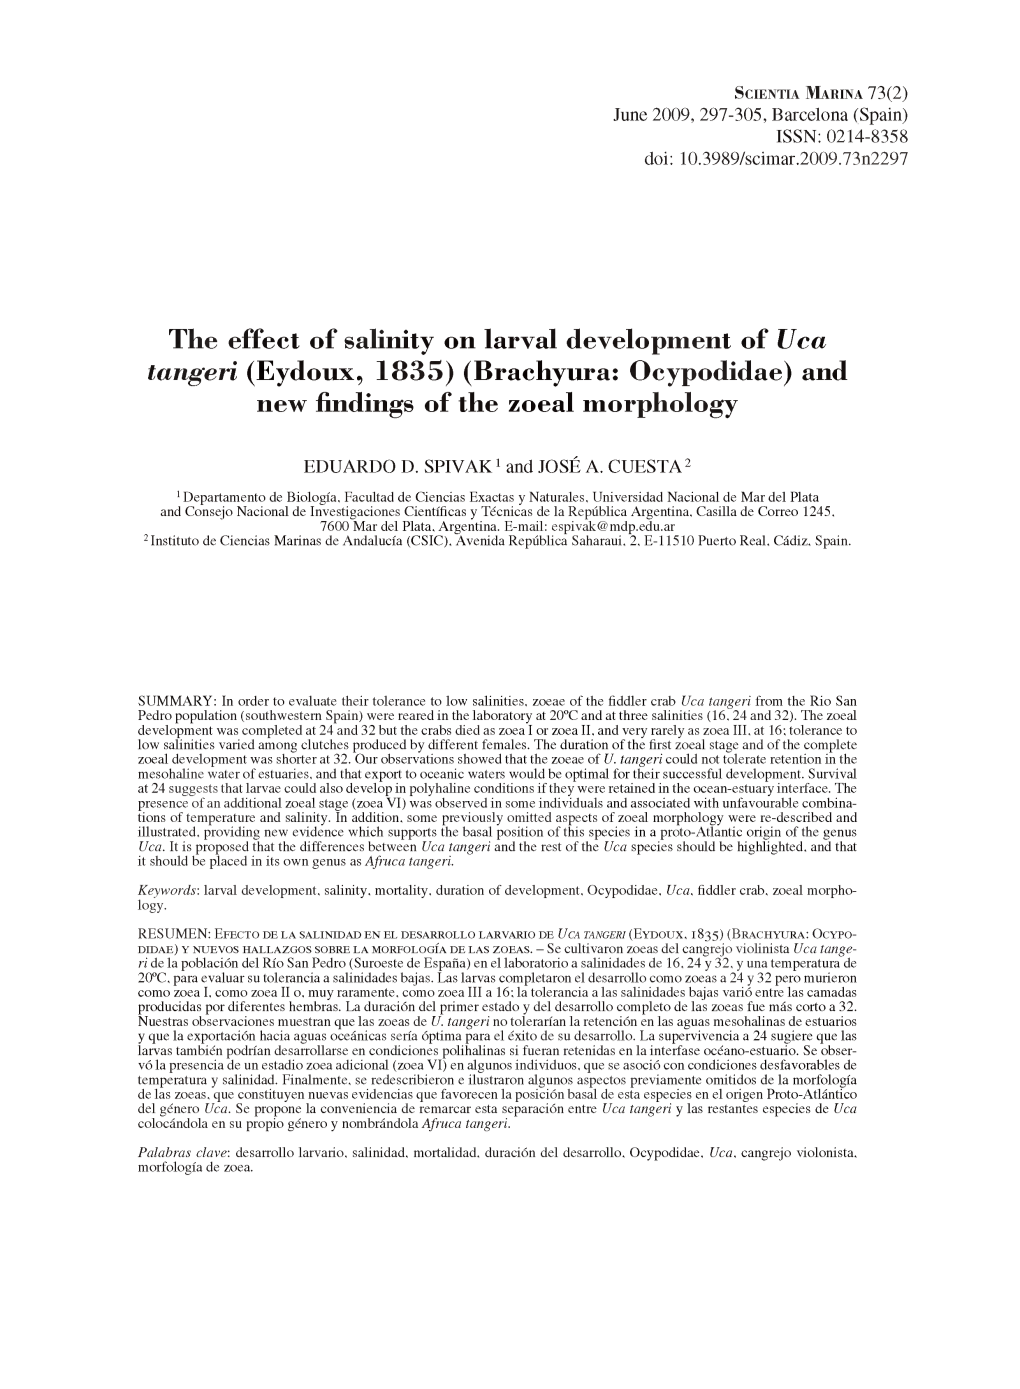 The Effect of Salinity on Larval Development of Uca Tangeri (Eydoux, 1835) (Brachyura: Ocypodidae) and New Findings of the Zoea